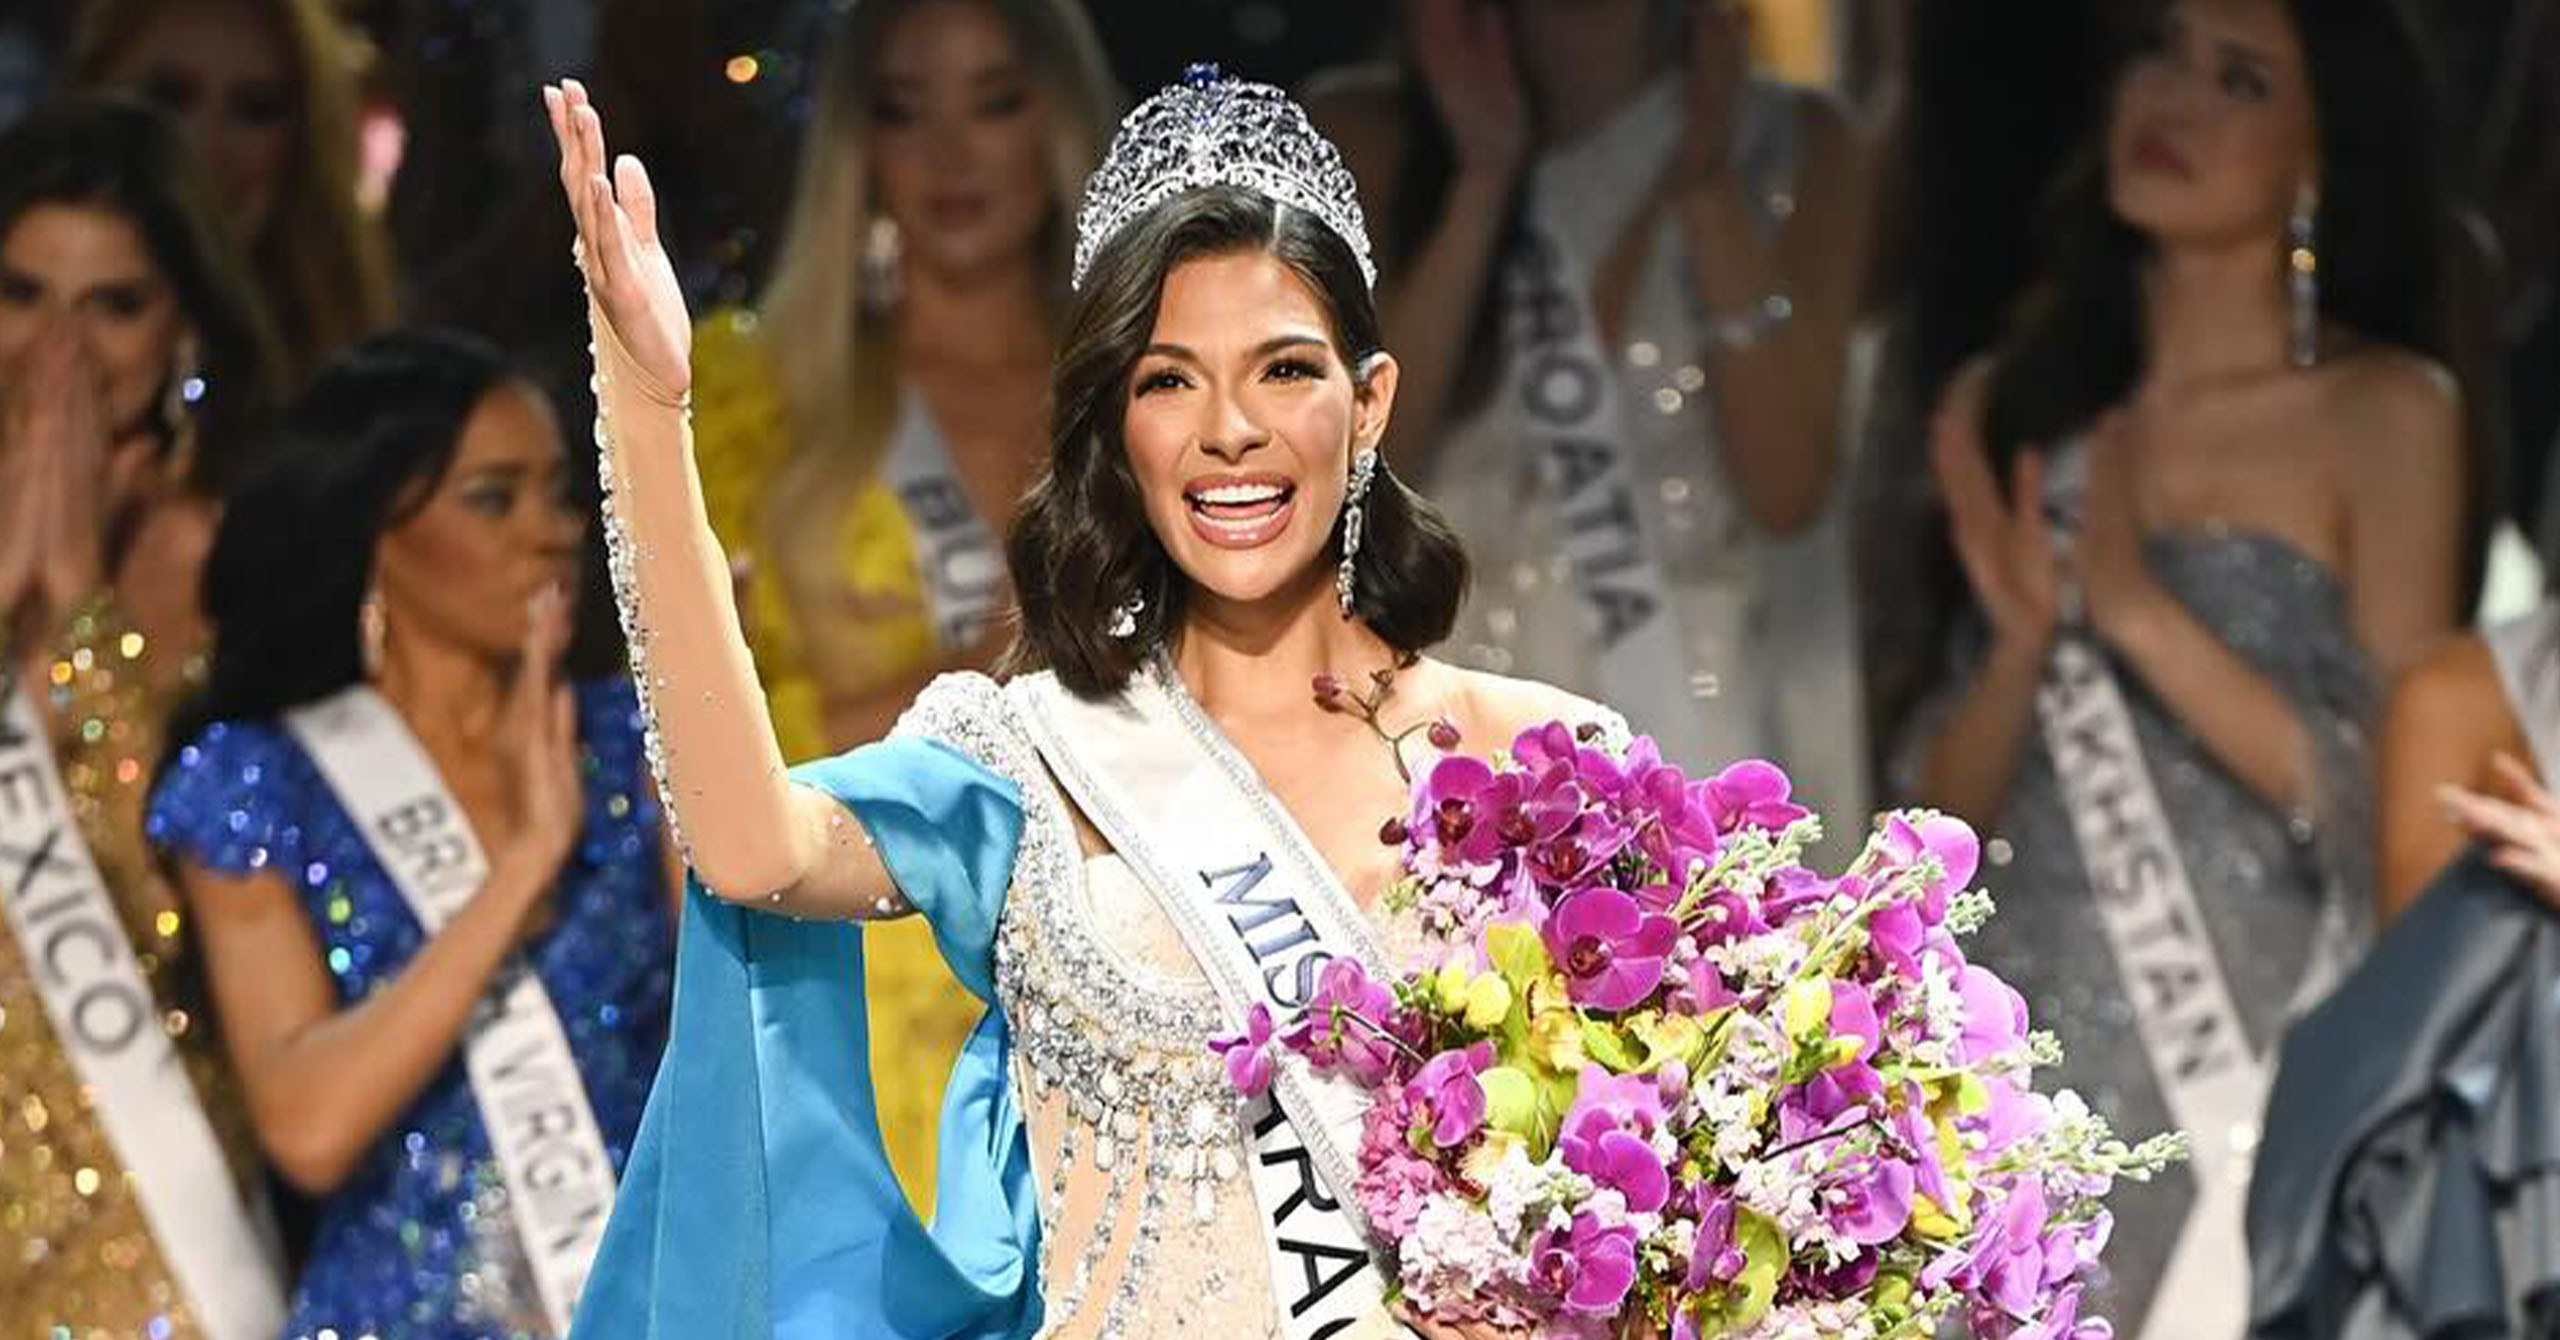 Sheynnis Palacios is Miss Universe 2023